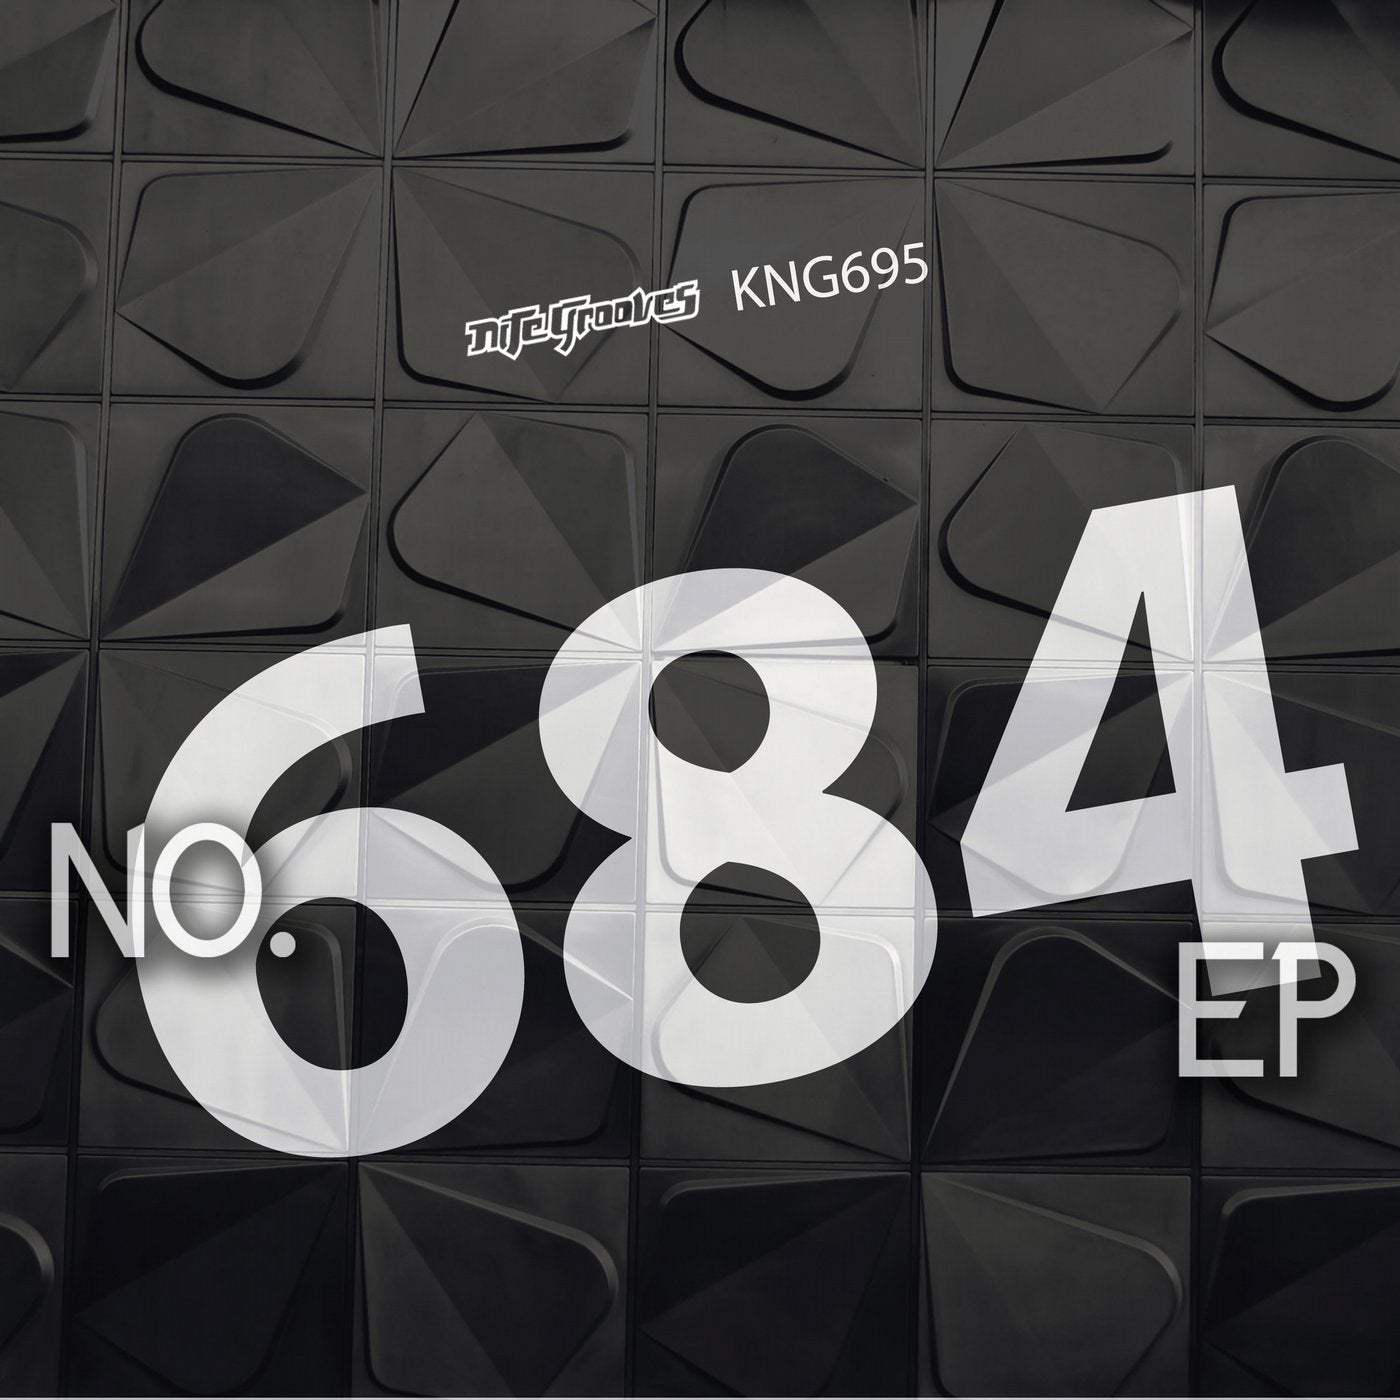 No. 684 EP